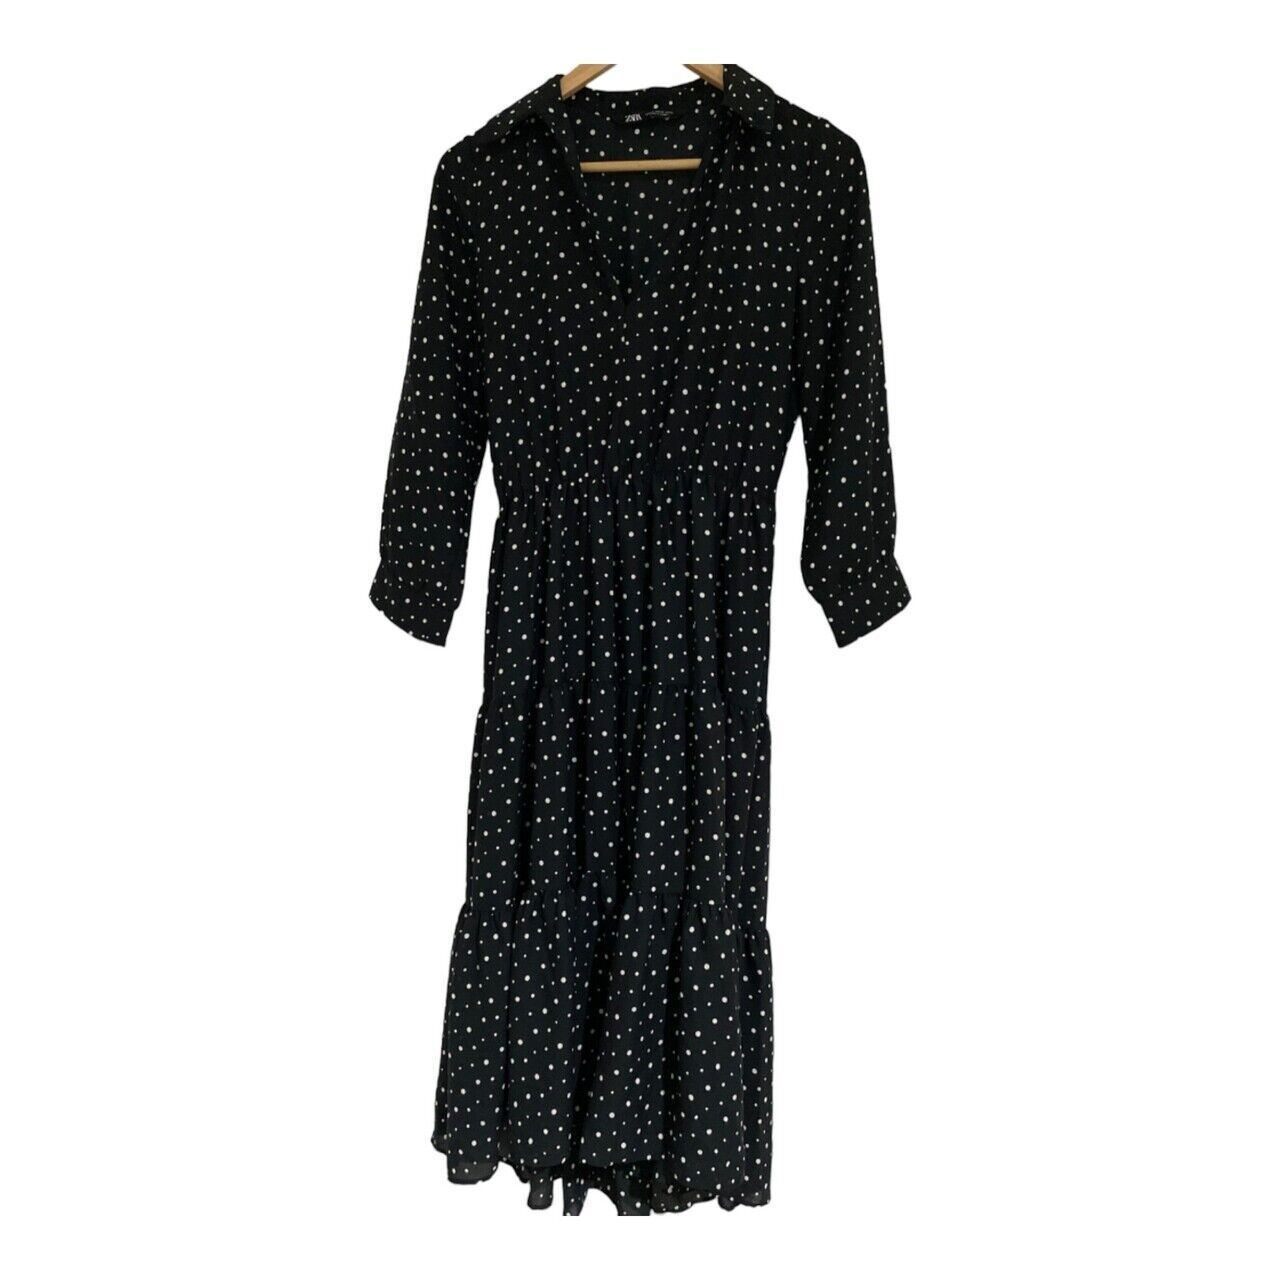 Zara Black Polkadots Long Dress